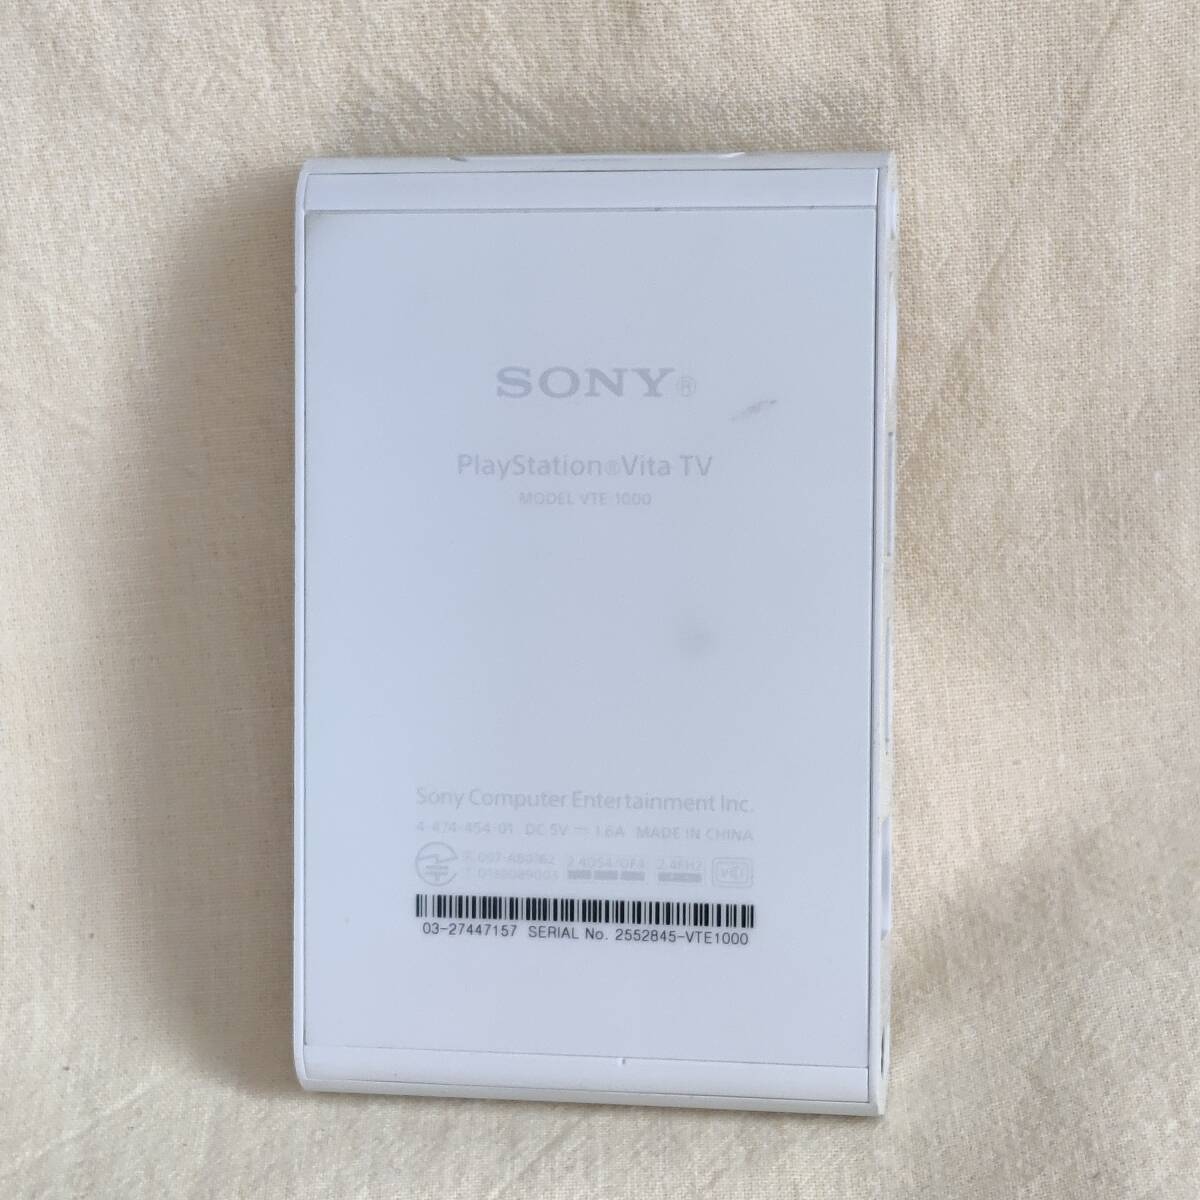 【447157】SONY PlayStation VITA TV 本体のみ PSVITA tv VTE-1000 メモリーカード8GB ジャンク JUNK_画像2